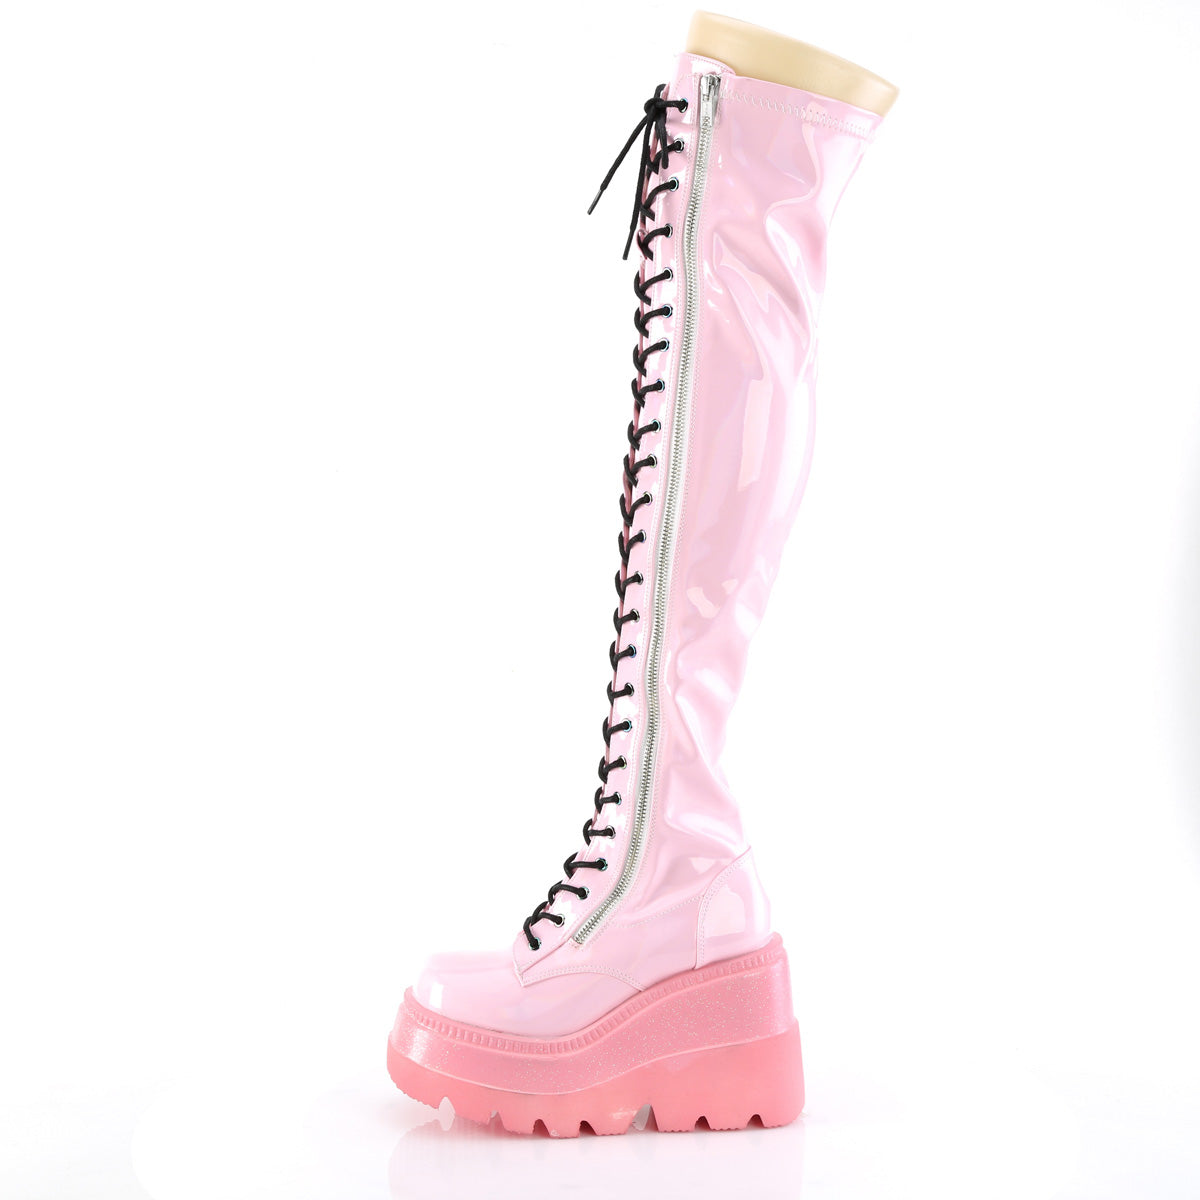 SHAKER-374-1 Demonia B Pink Hologram Stretch Patentent Women's Over-the-Knee Boots [Alternative Footwear]